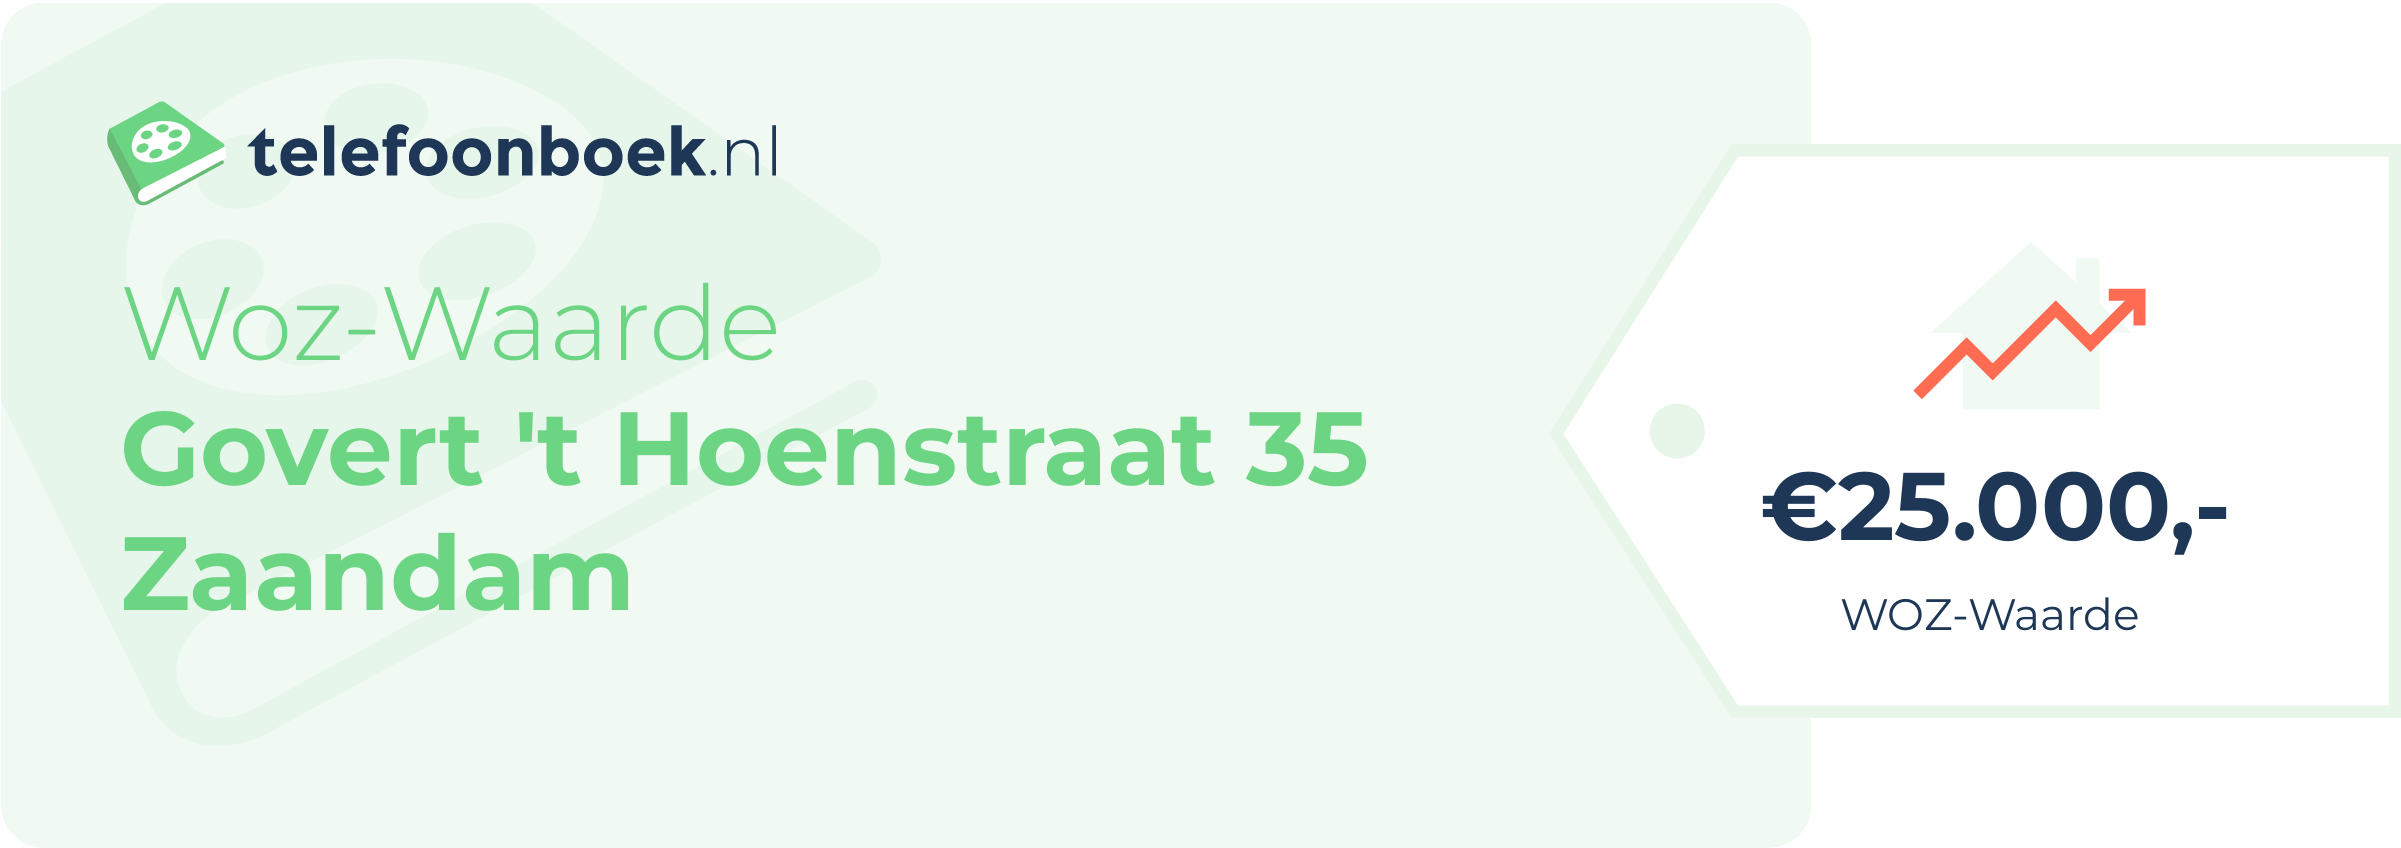 WOZ-waarde Govert 't Hoenstraat 35 Zaandam